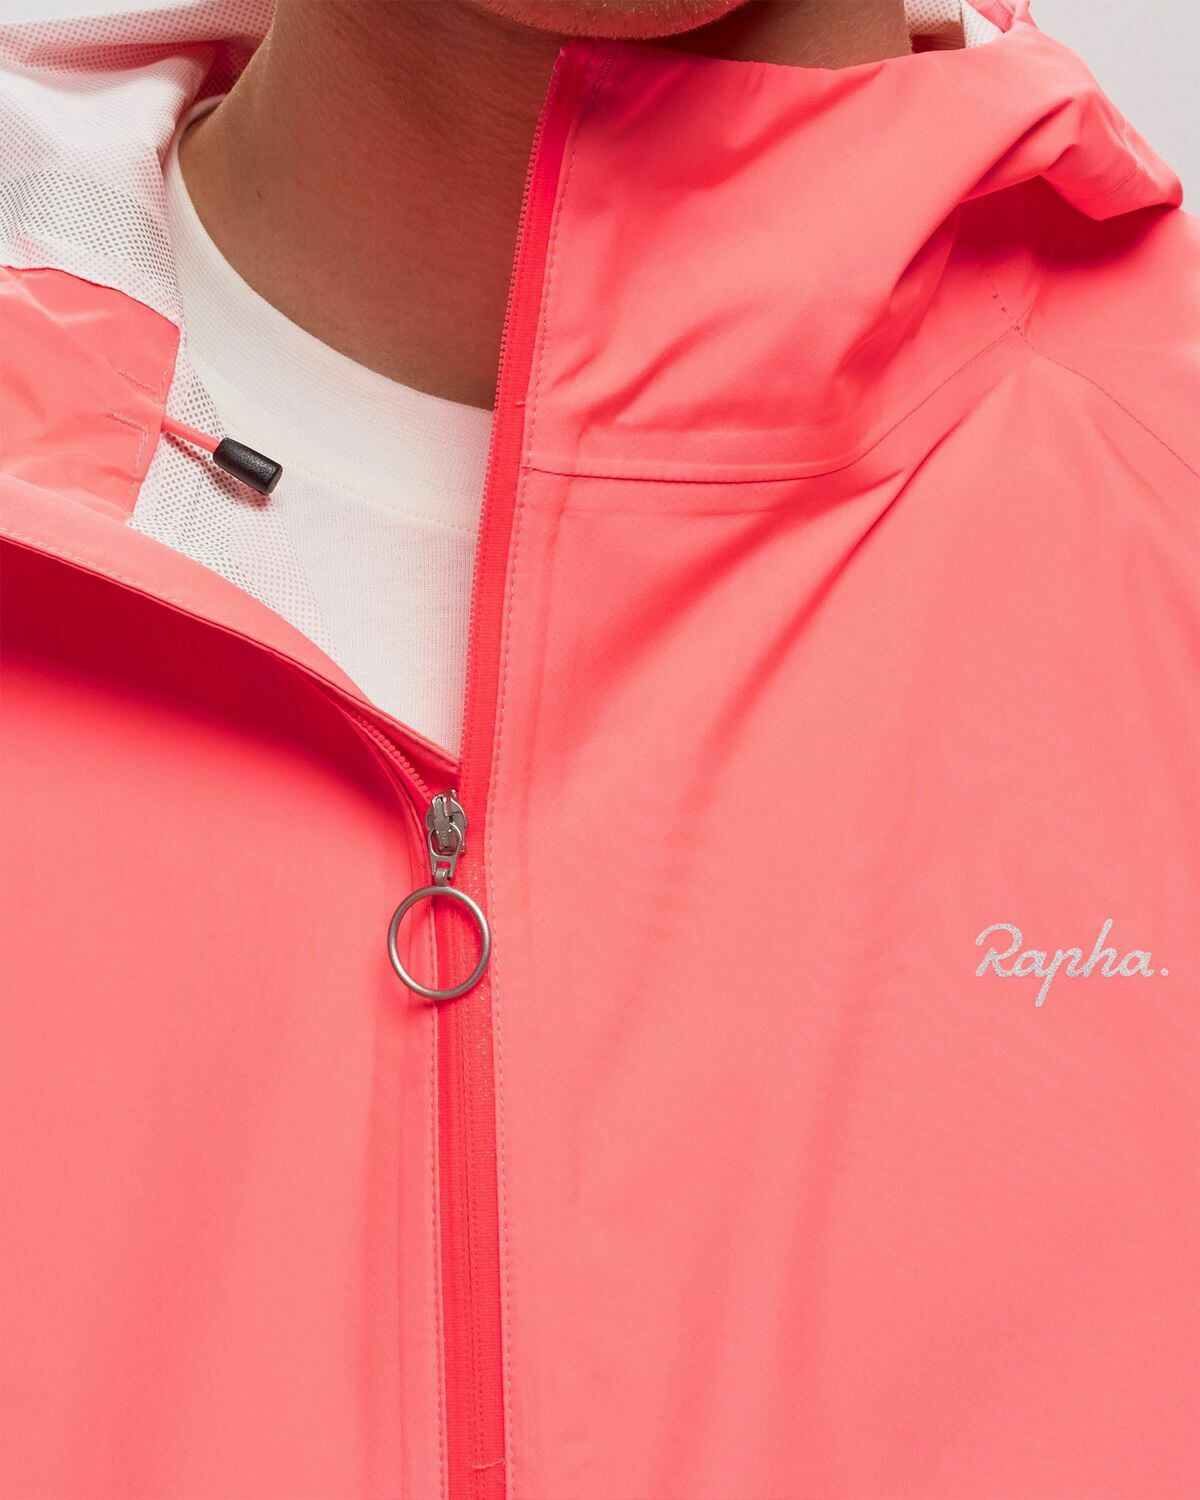 Rapha Commuter Jacket Pink - Mens - Shell Jackets